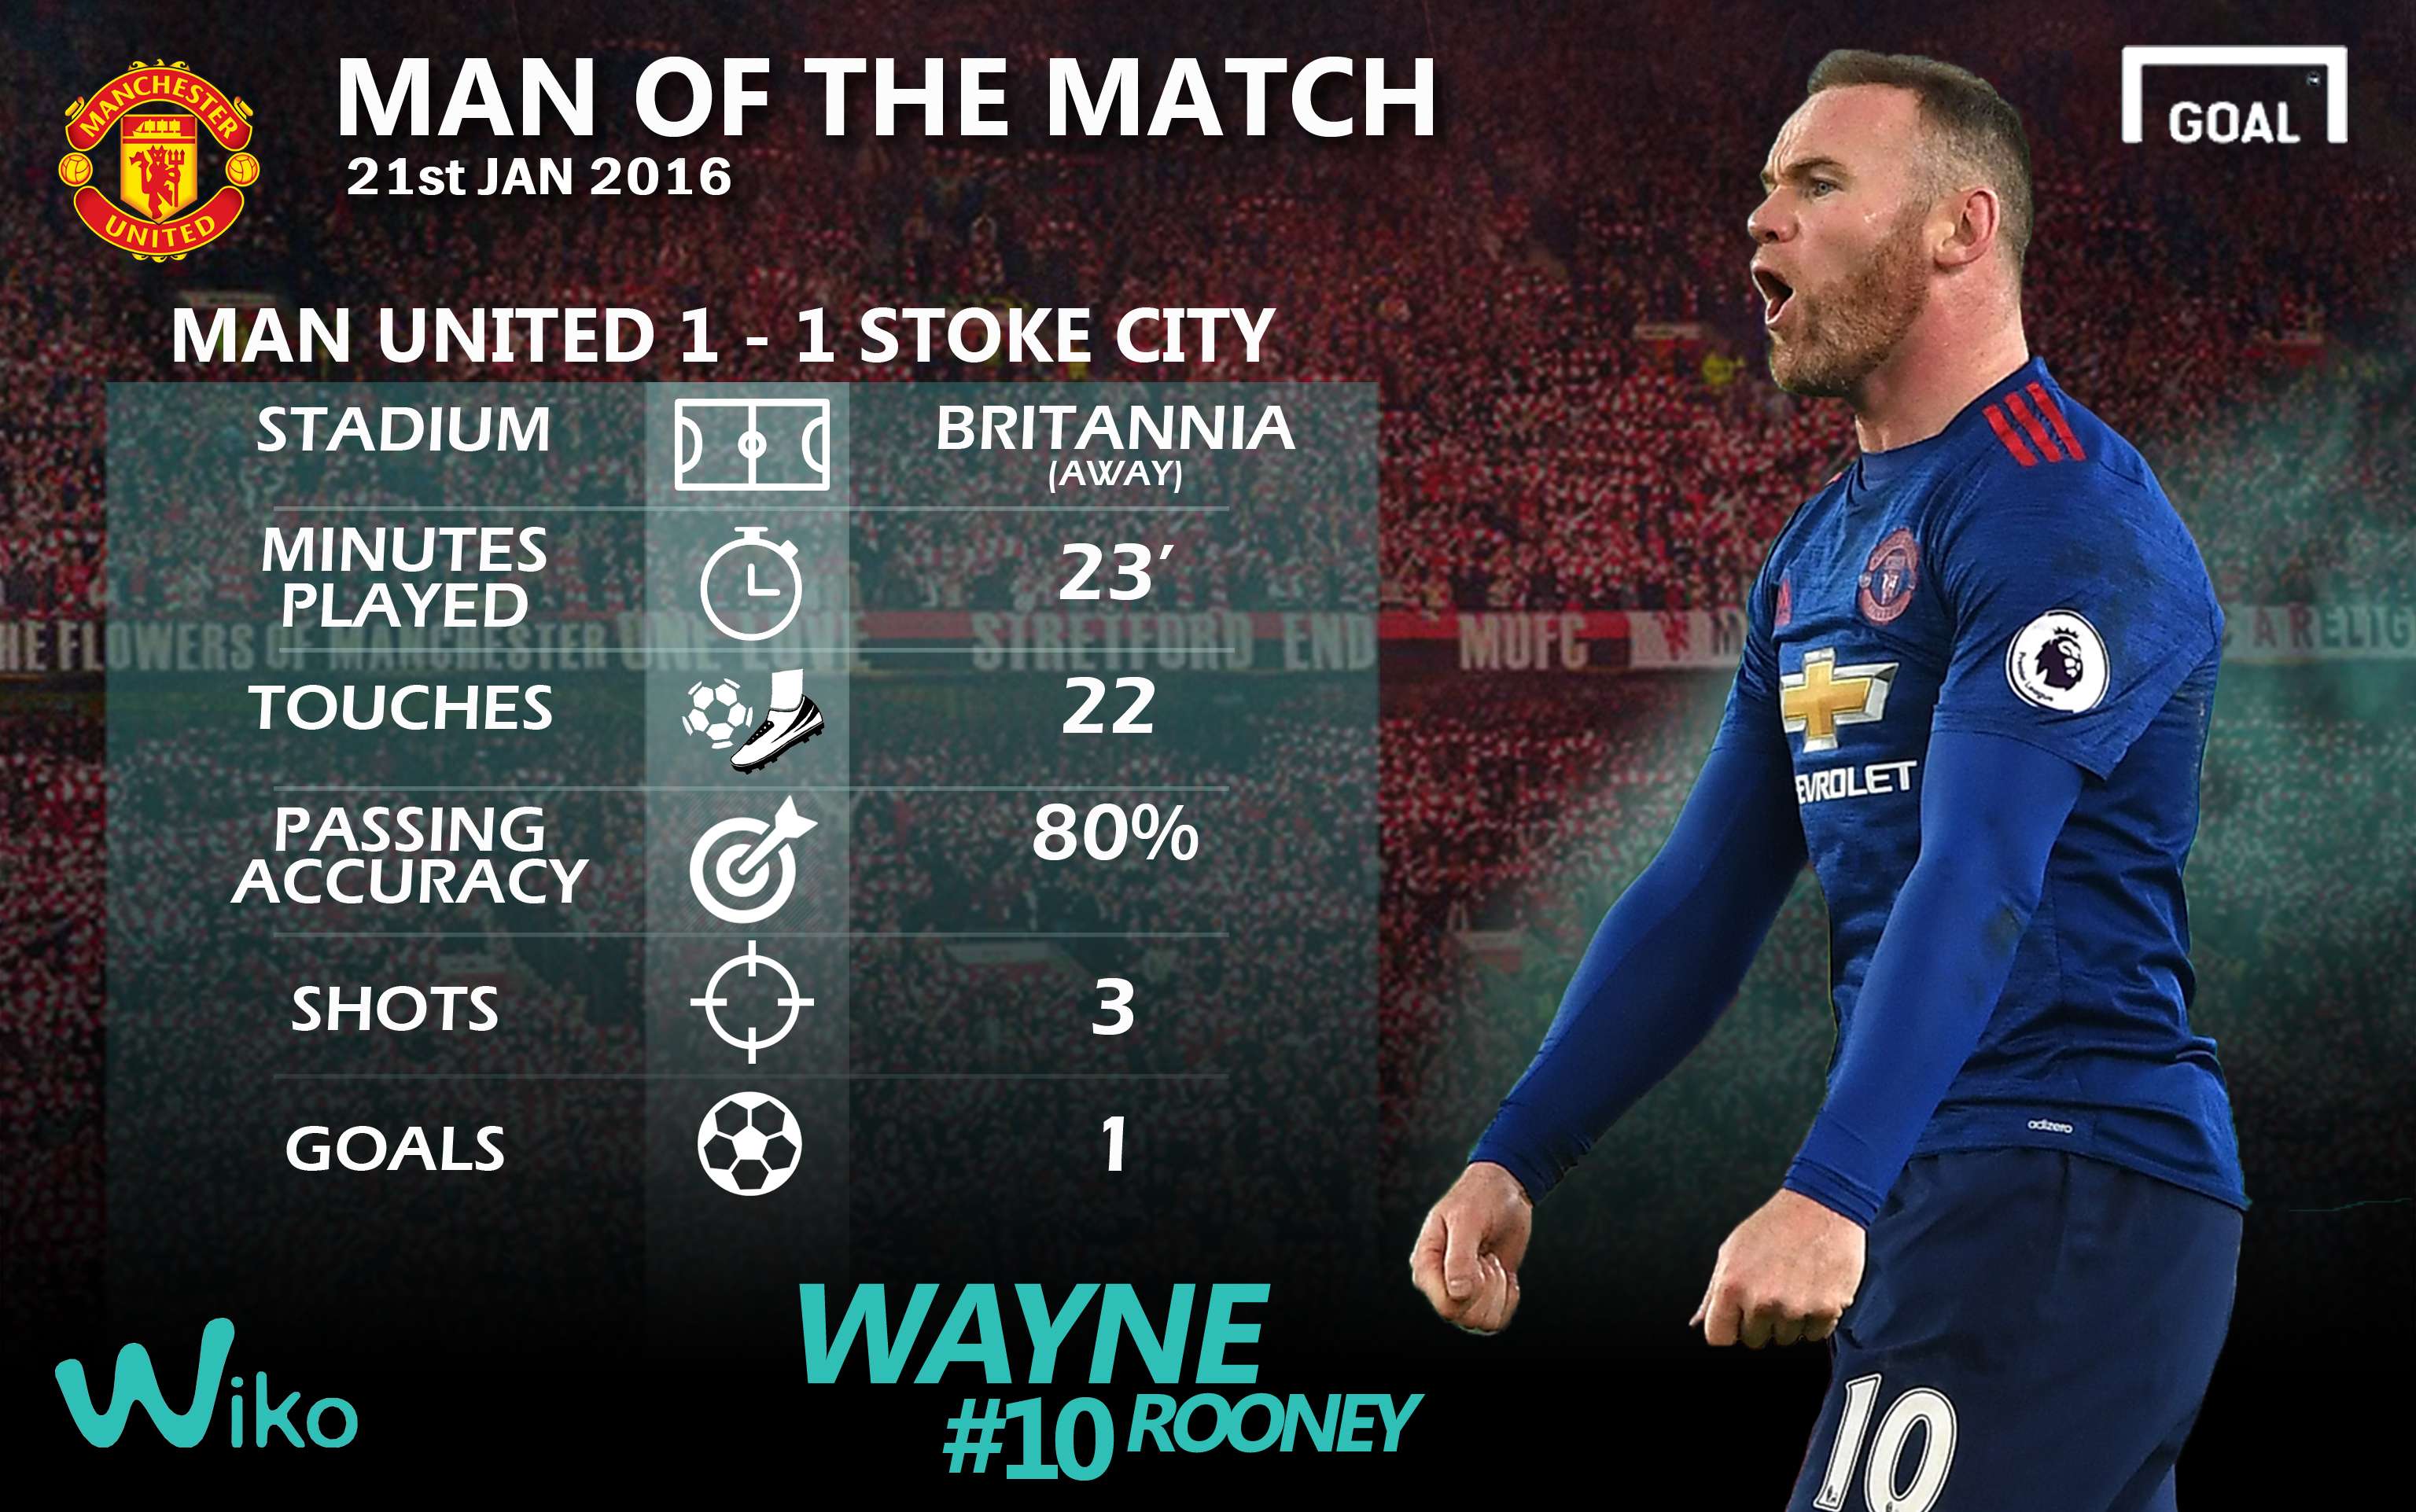 WIKO Man of the Match – Wayne Rooney